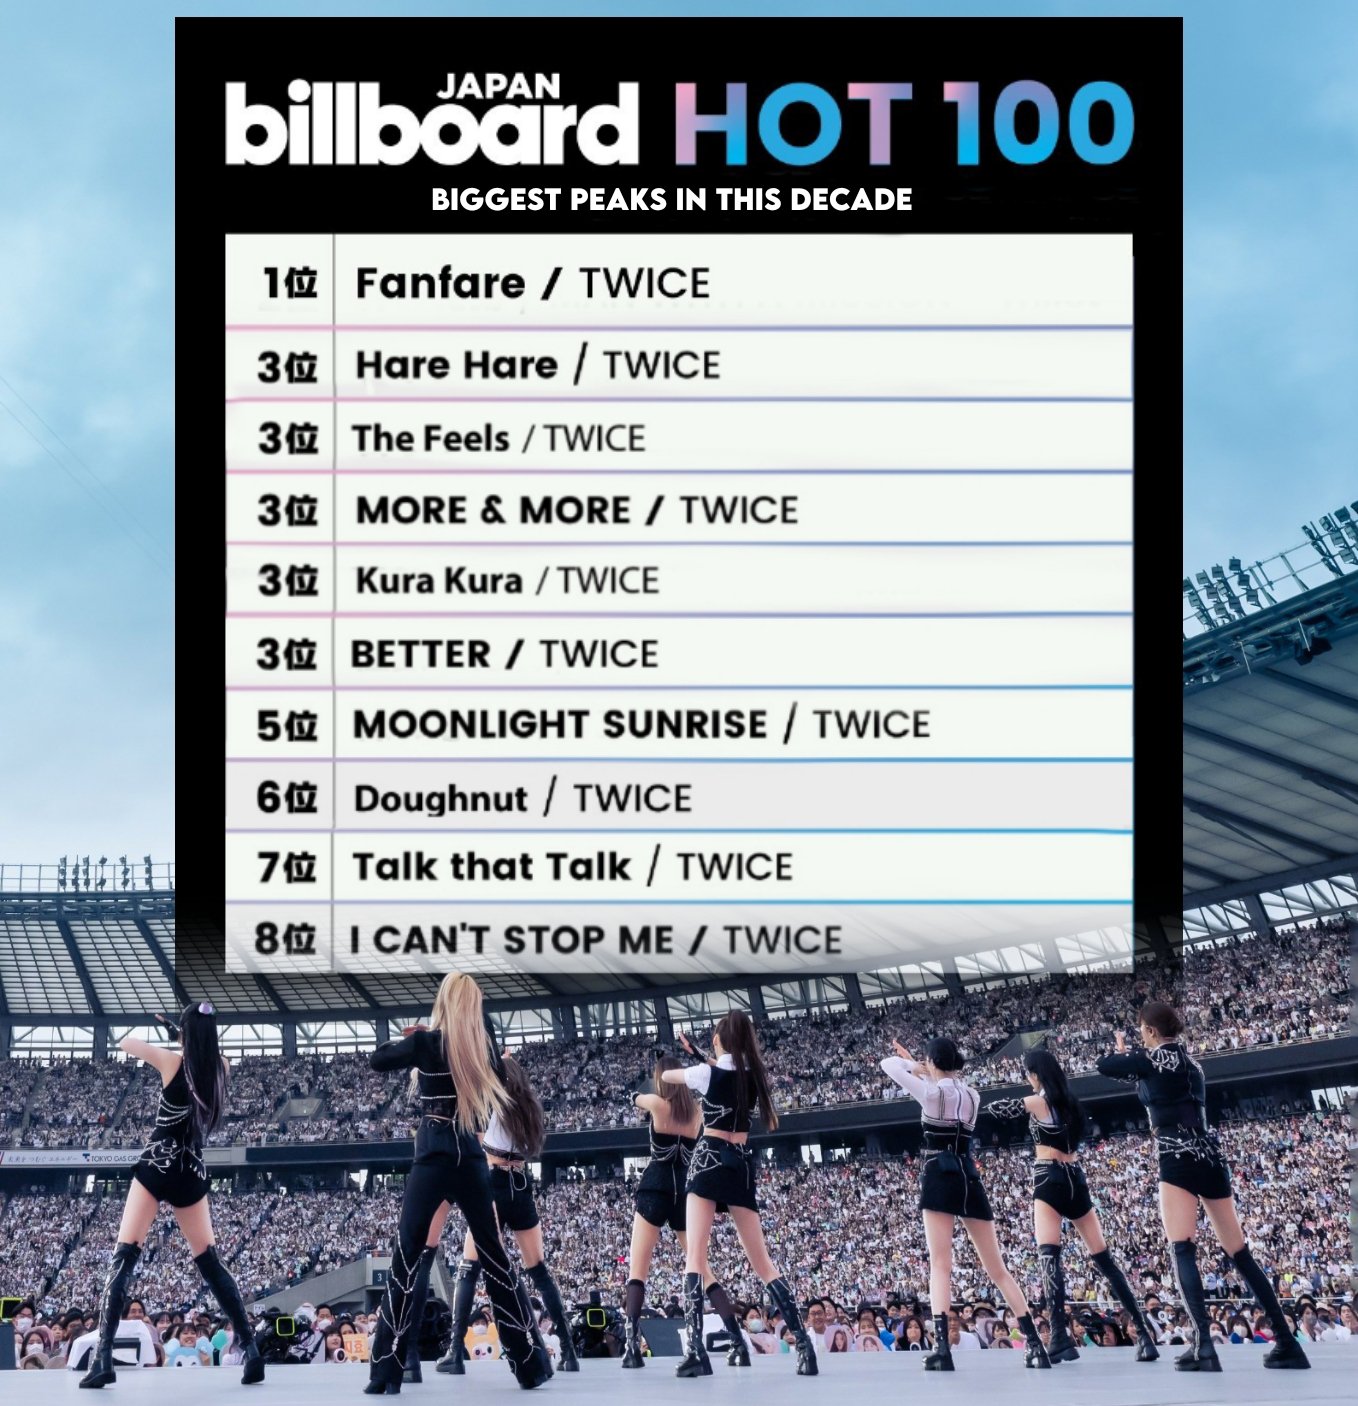 SEKAI NO OWARI's 'Habit' Hits No. 1 on Japan Hot 100 – Billboard